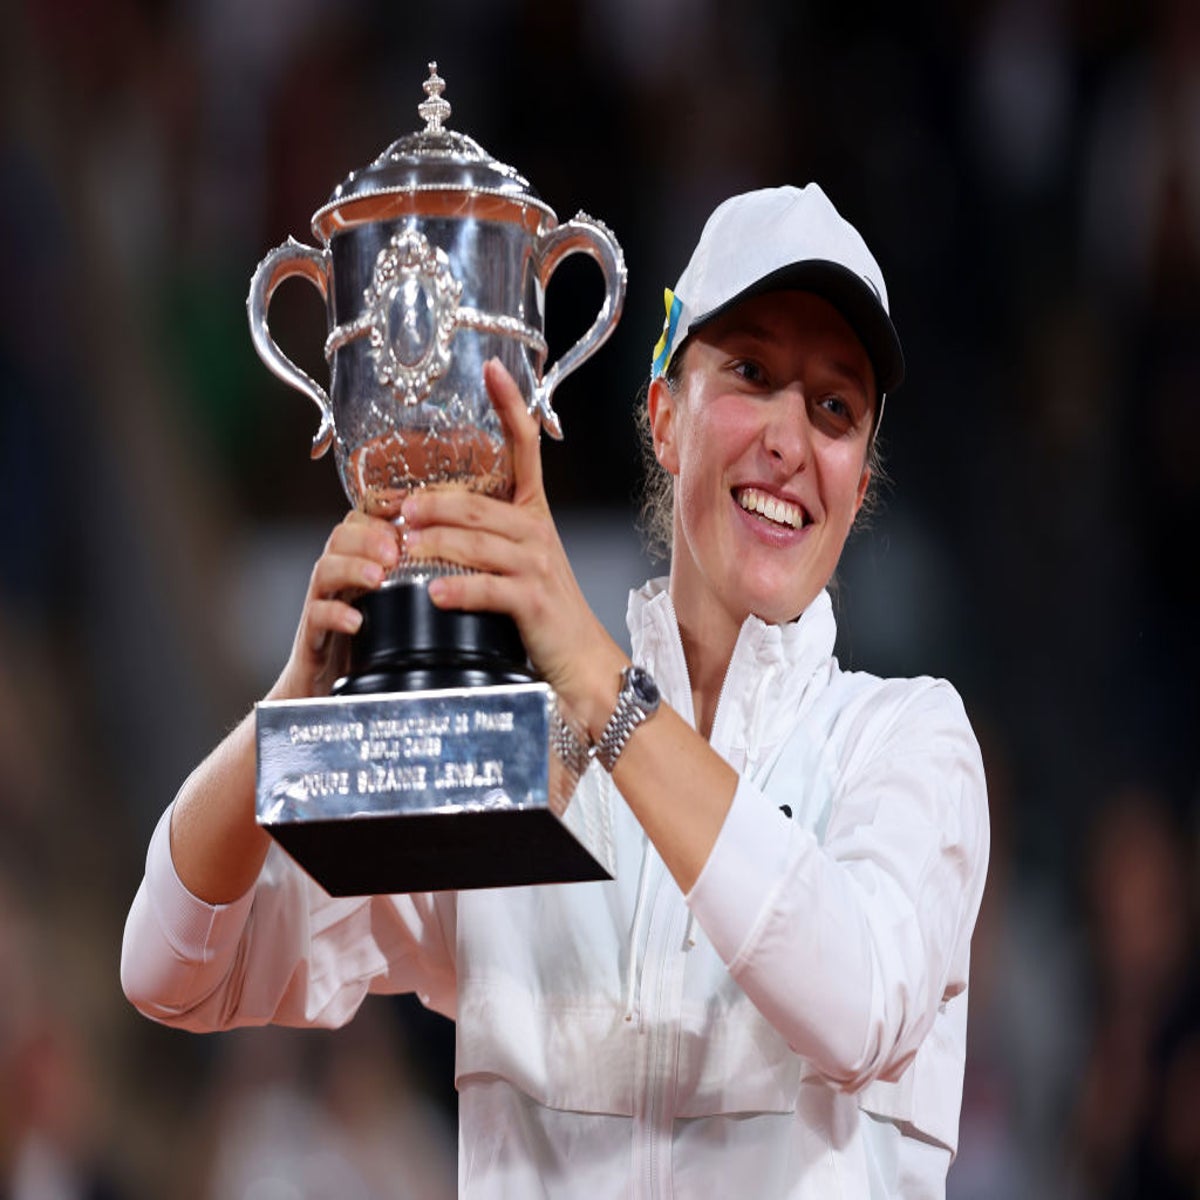 Tennis: Tennis-WTA defends late start to Italian Open women's final